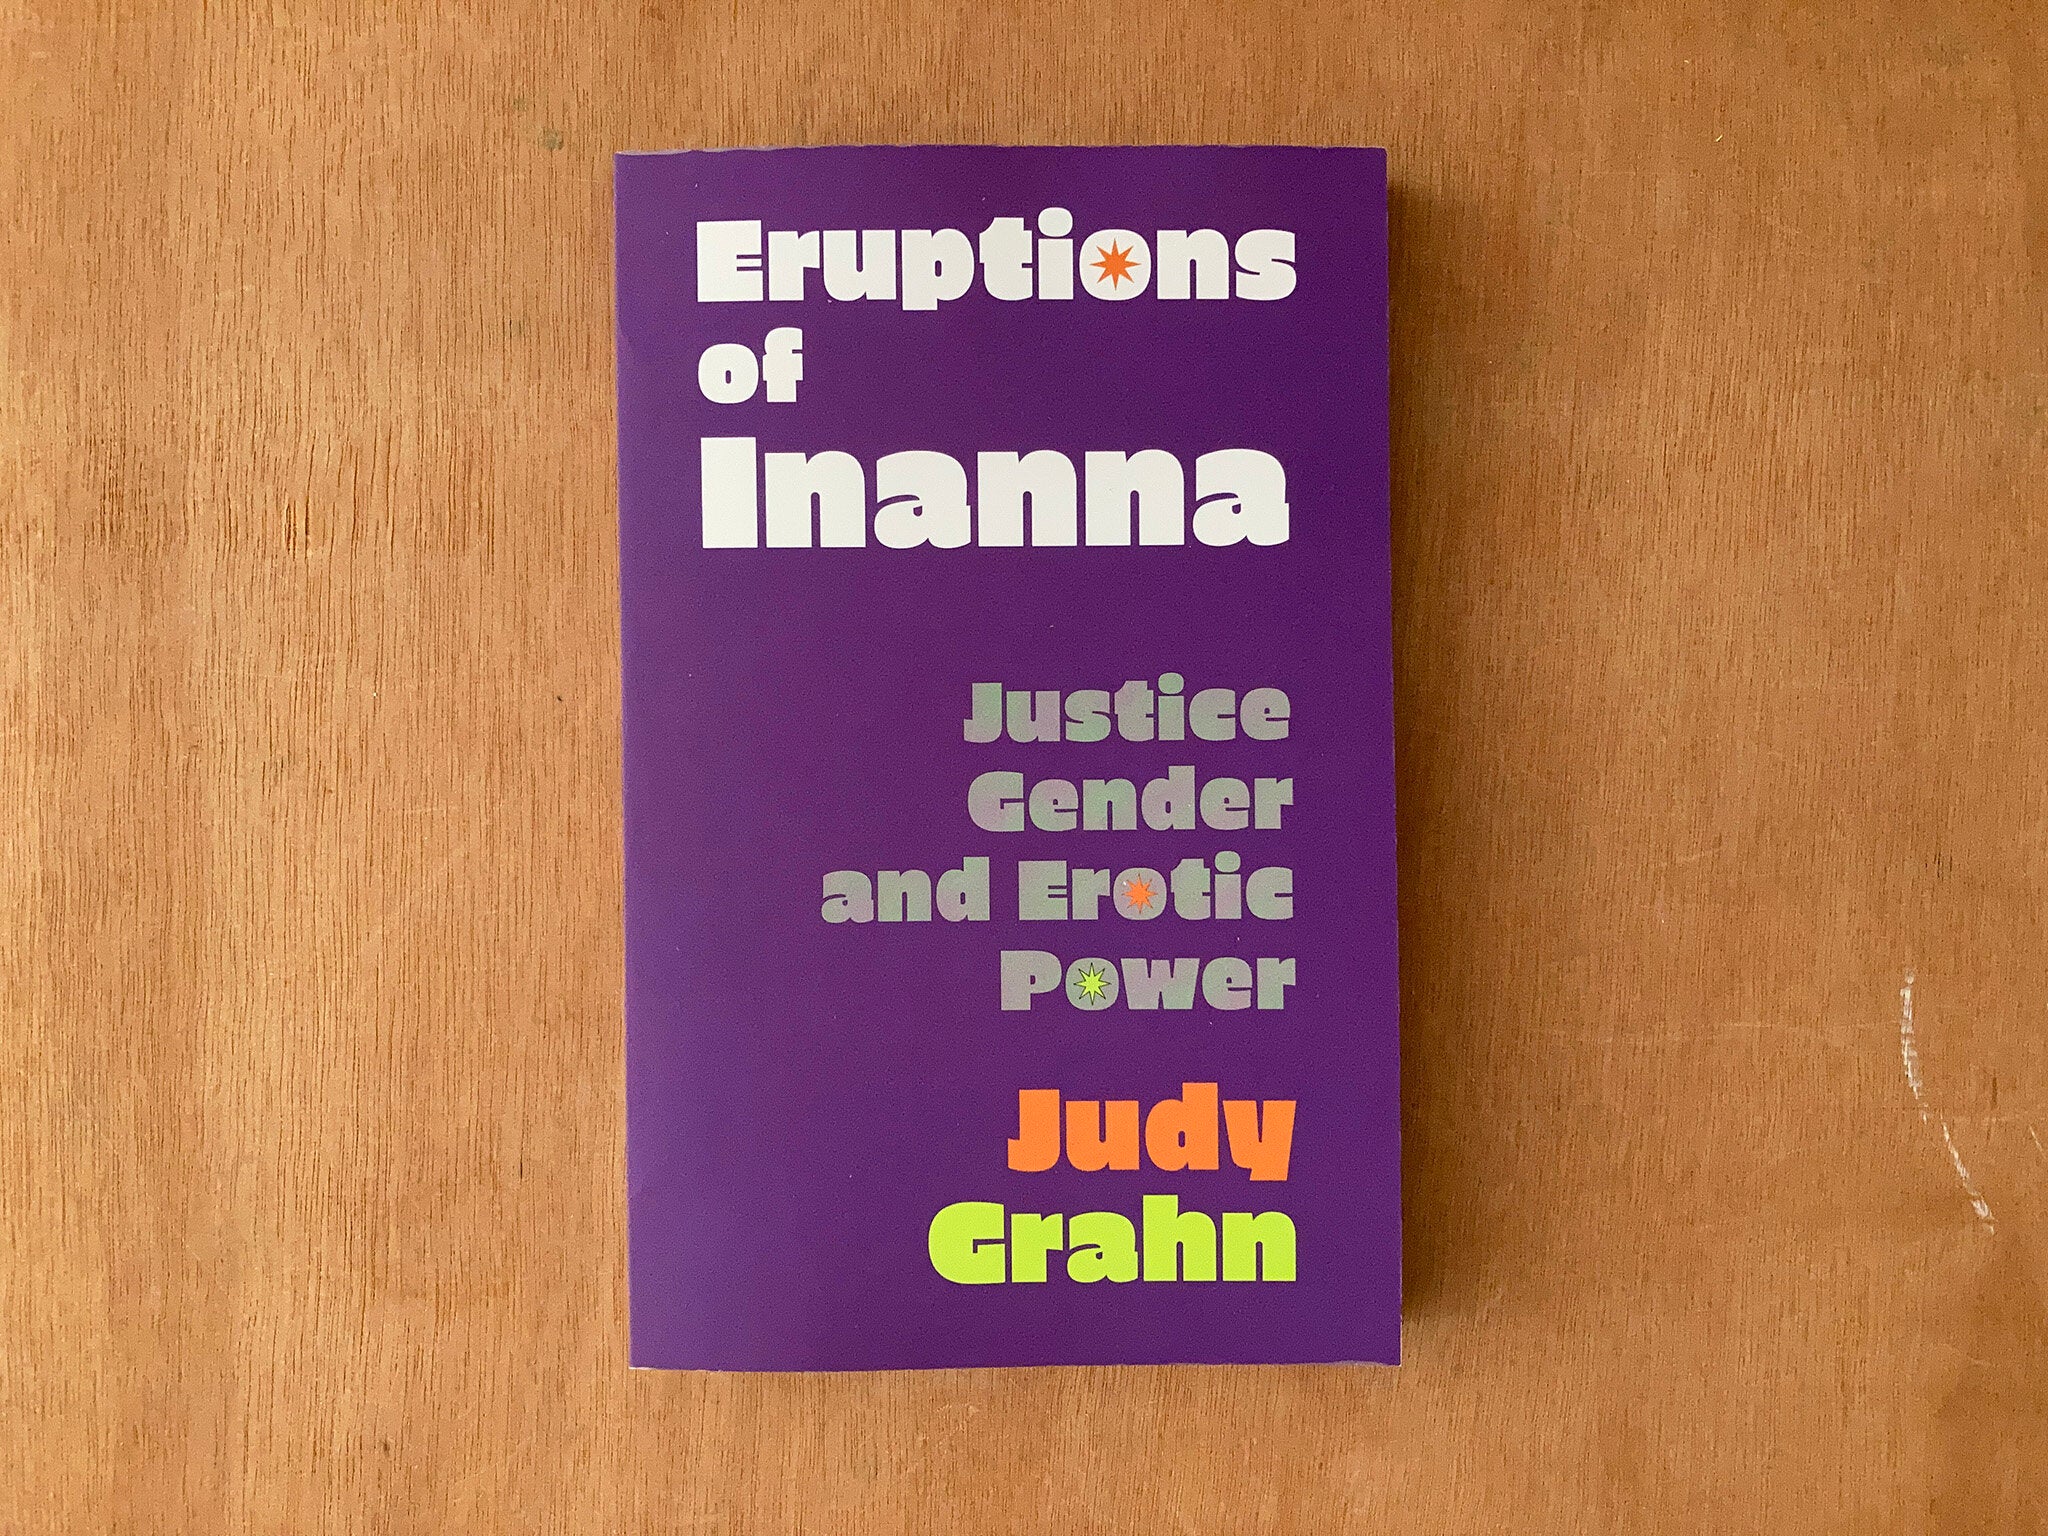 ERUPTIONS OF INANNA by Judy Grahn